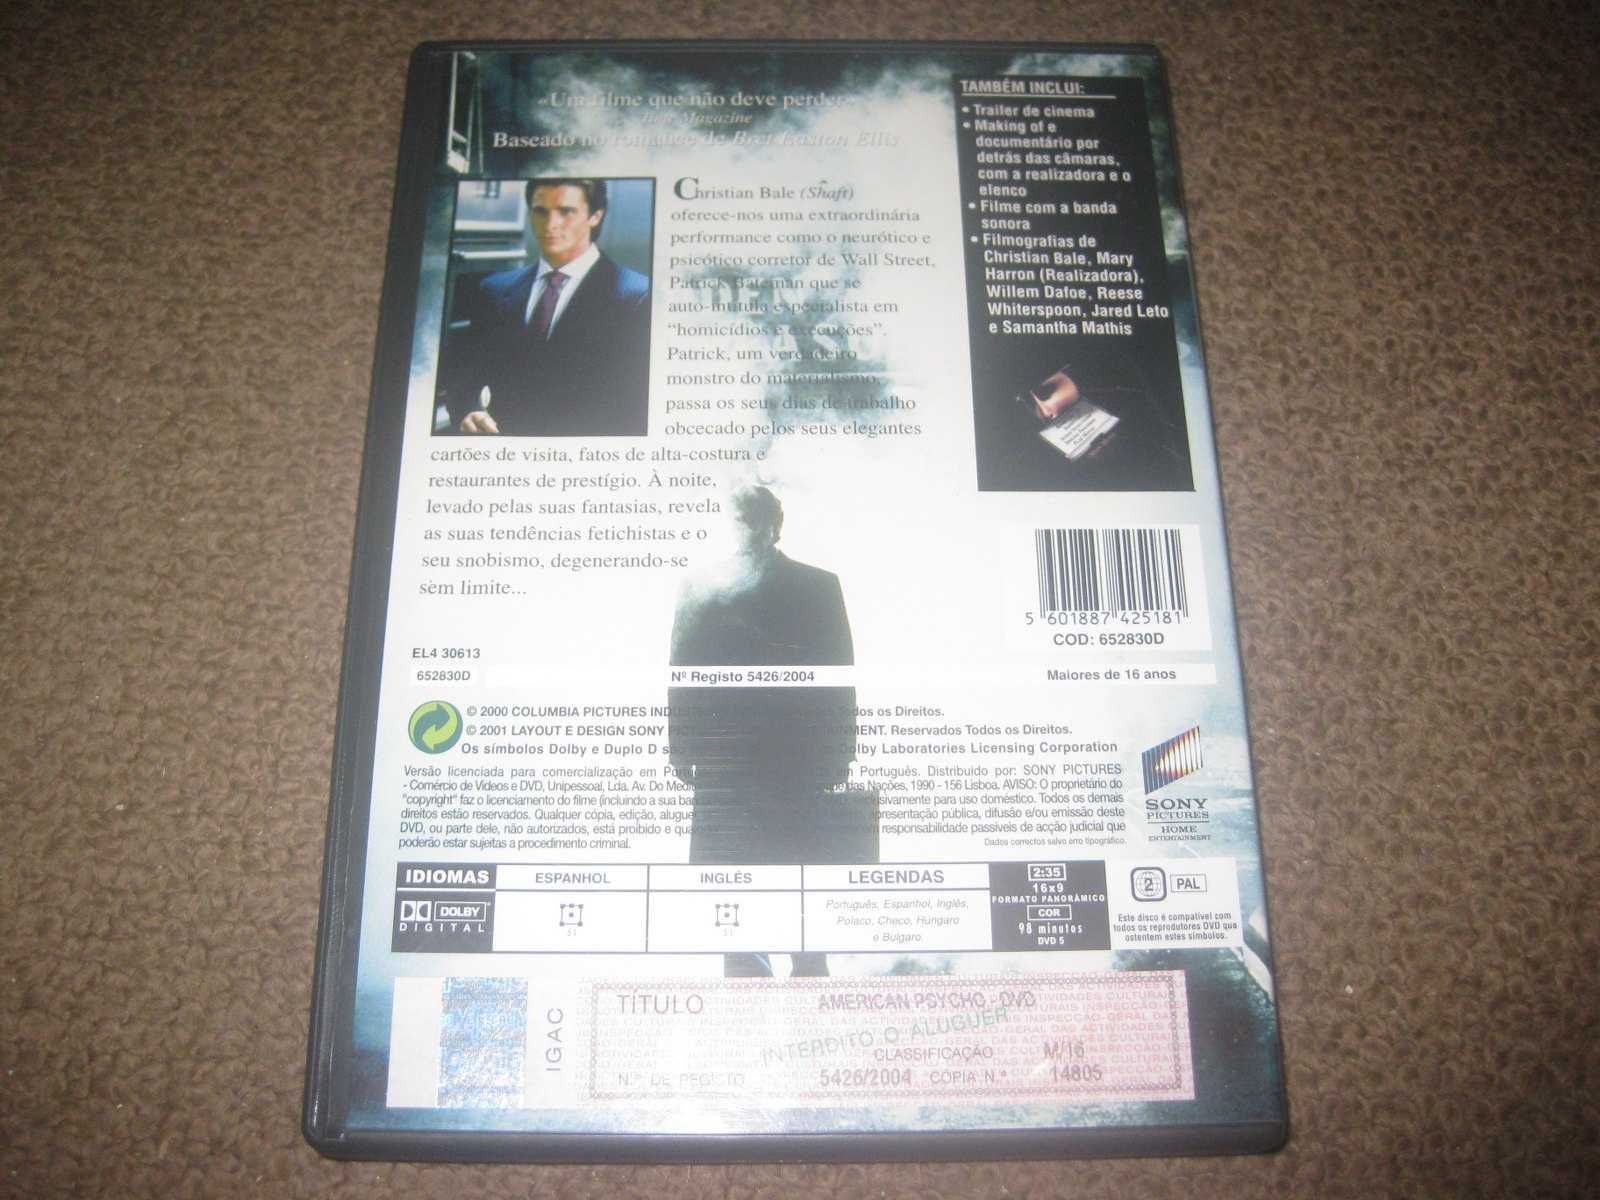 DVD "American Psycho" com Christian Bale/Raro!